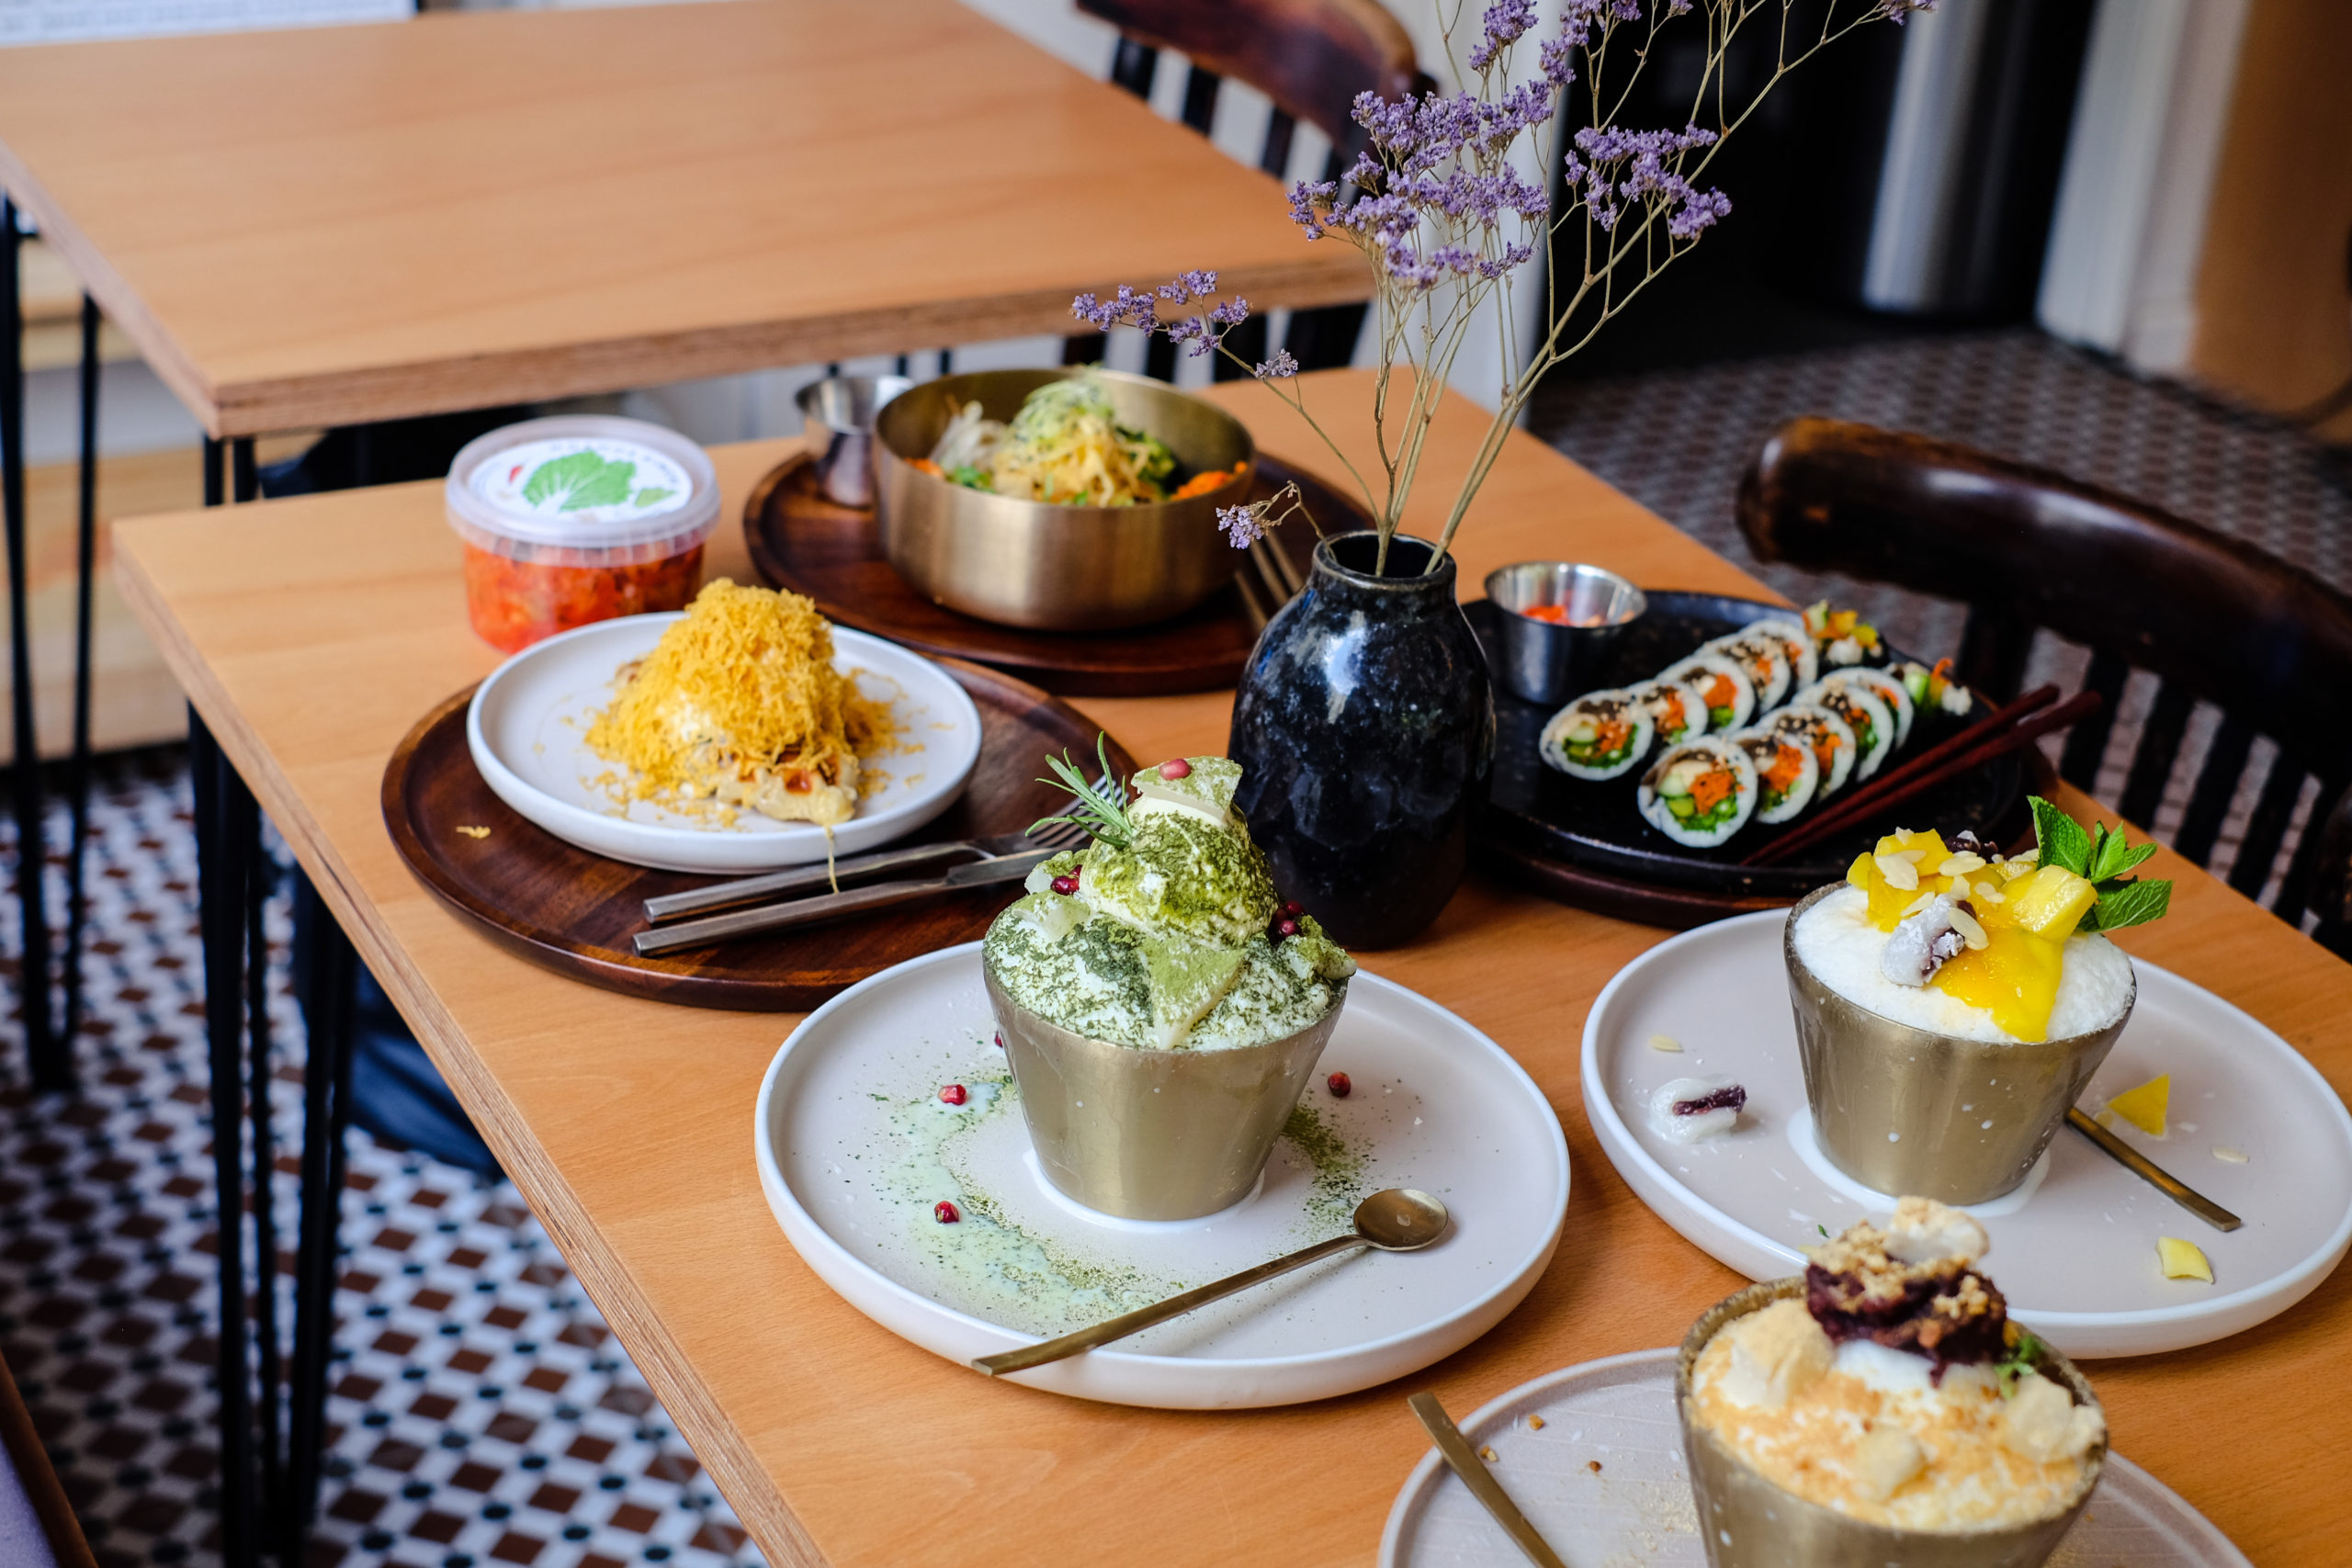 Unbedingt probieren: das koreanische Dessert Bingsu. Foto: Bettina Grabl